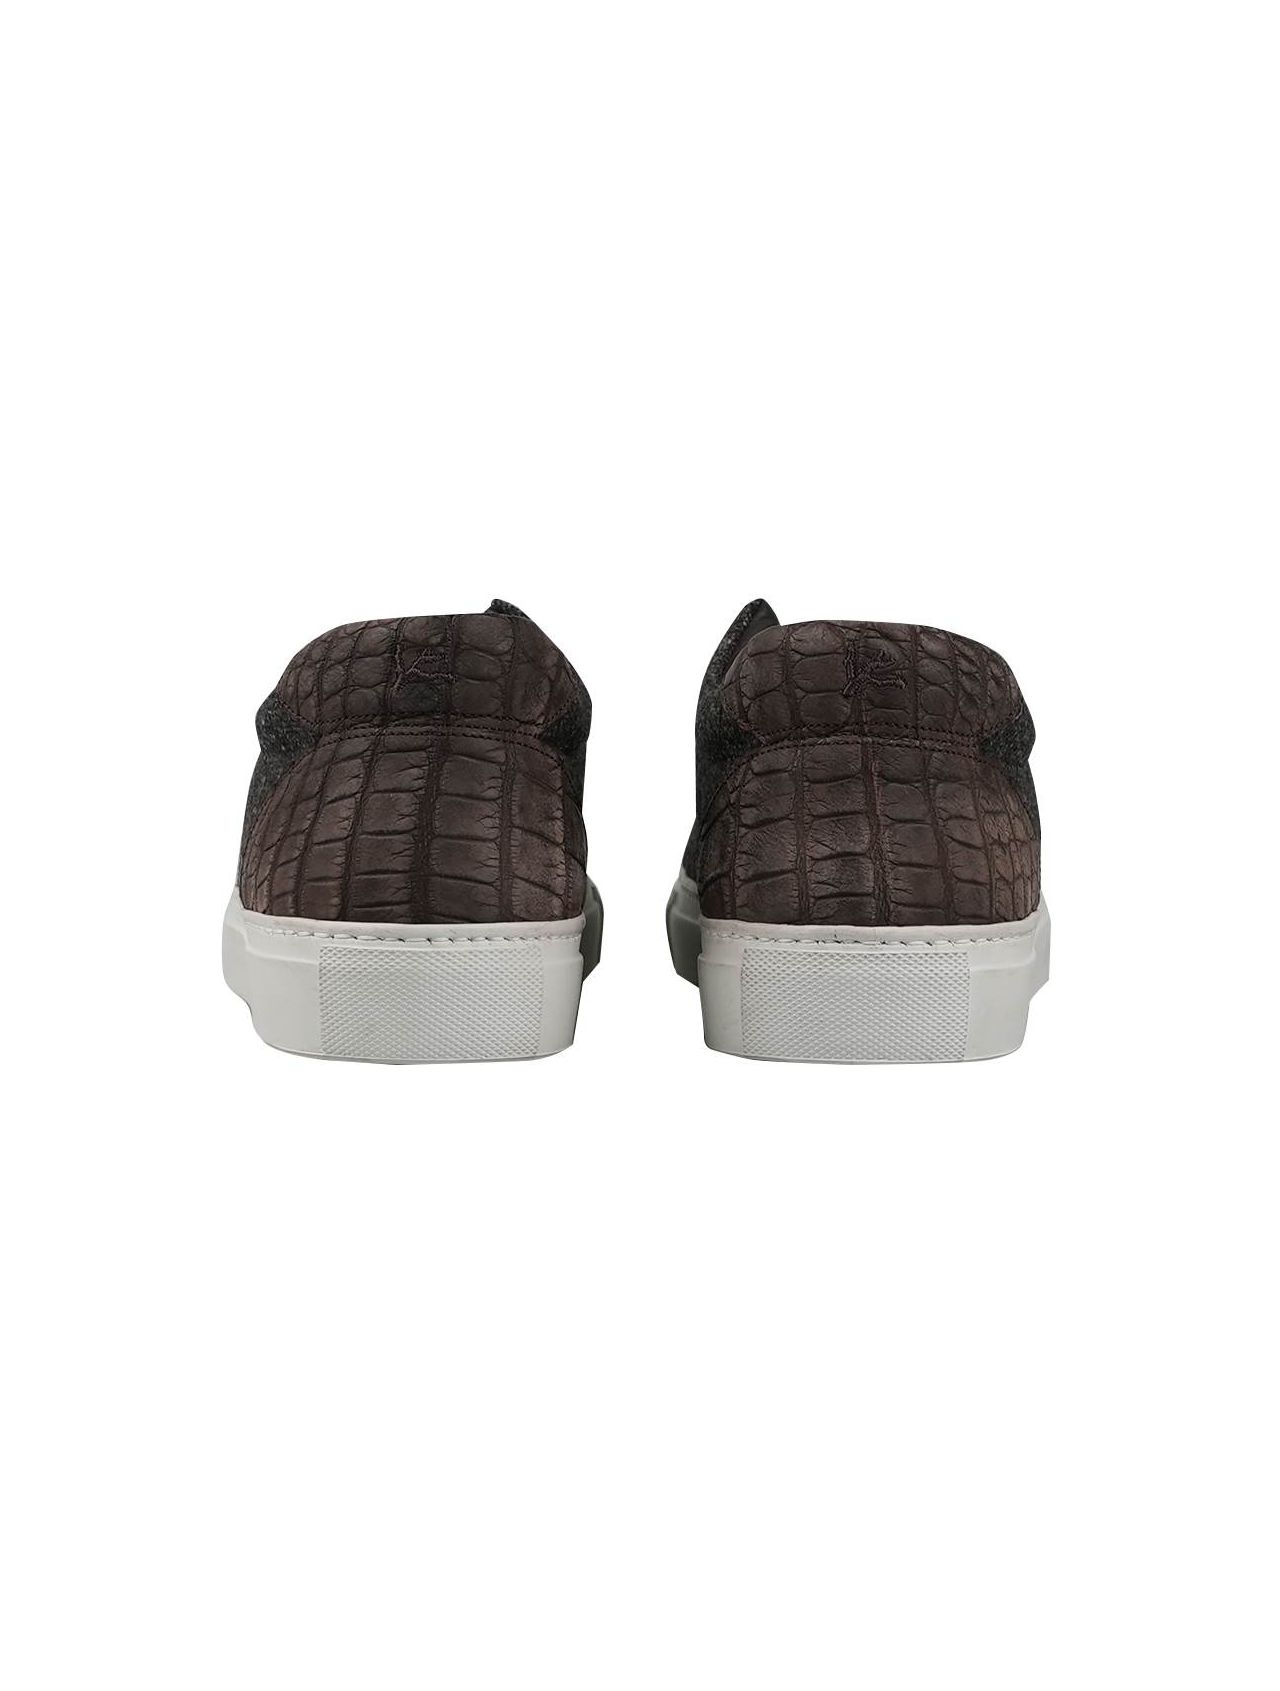 Isaia Crocodile and Wool Slip-On Sneakers